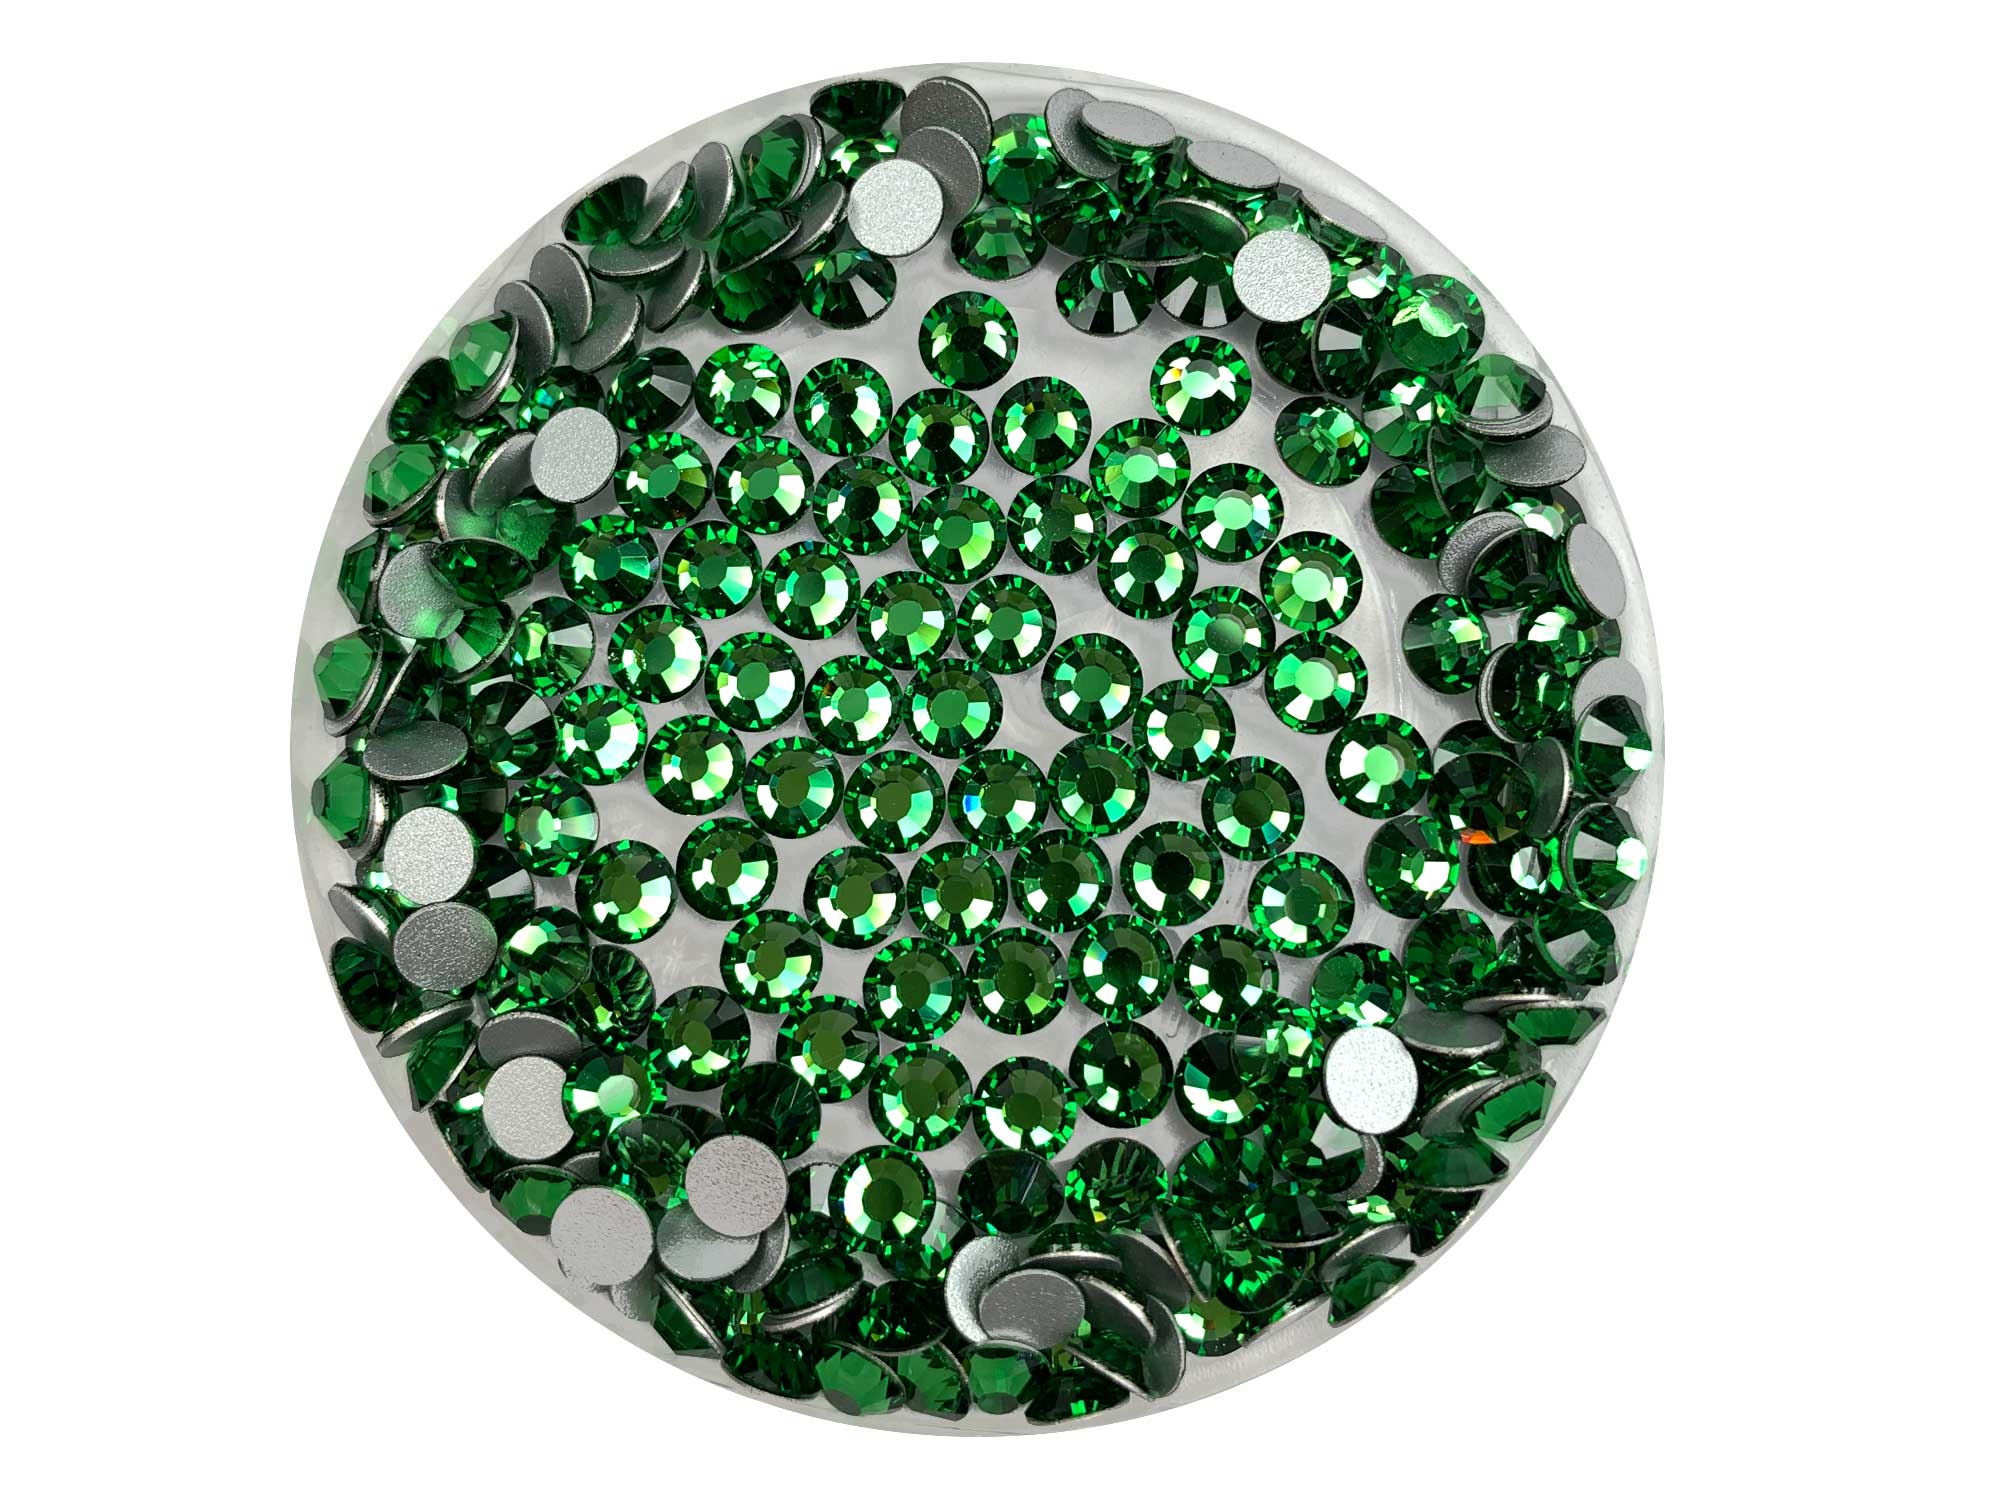 Shamrock, Preciosa Viva Chaton Roses Article 438-11-612 (Viva12 Rhinestone Flatbacks), Genuine Czech Crystals, medium emerald green color